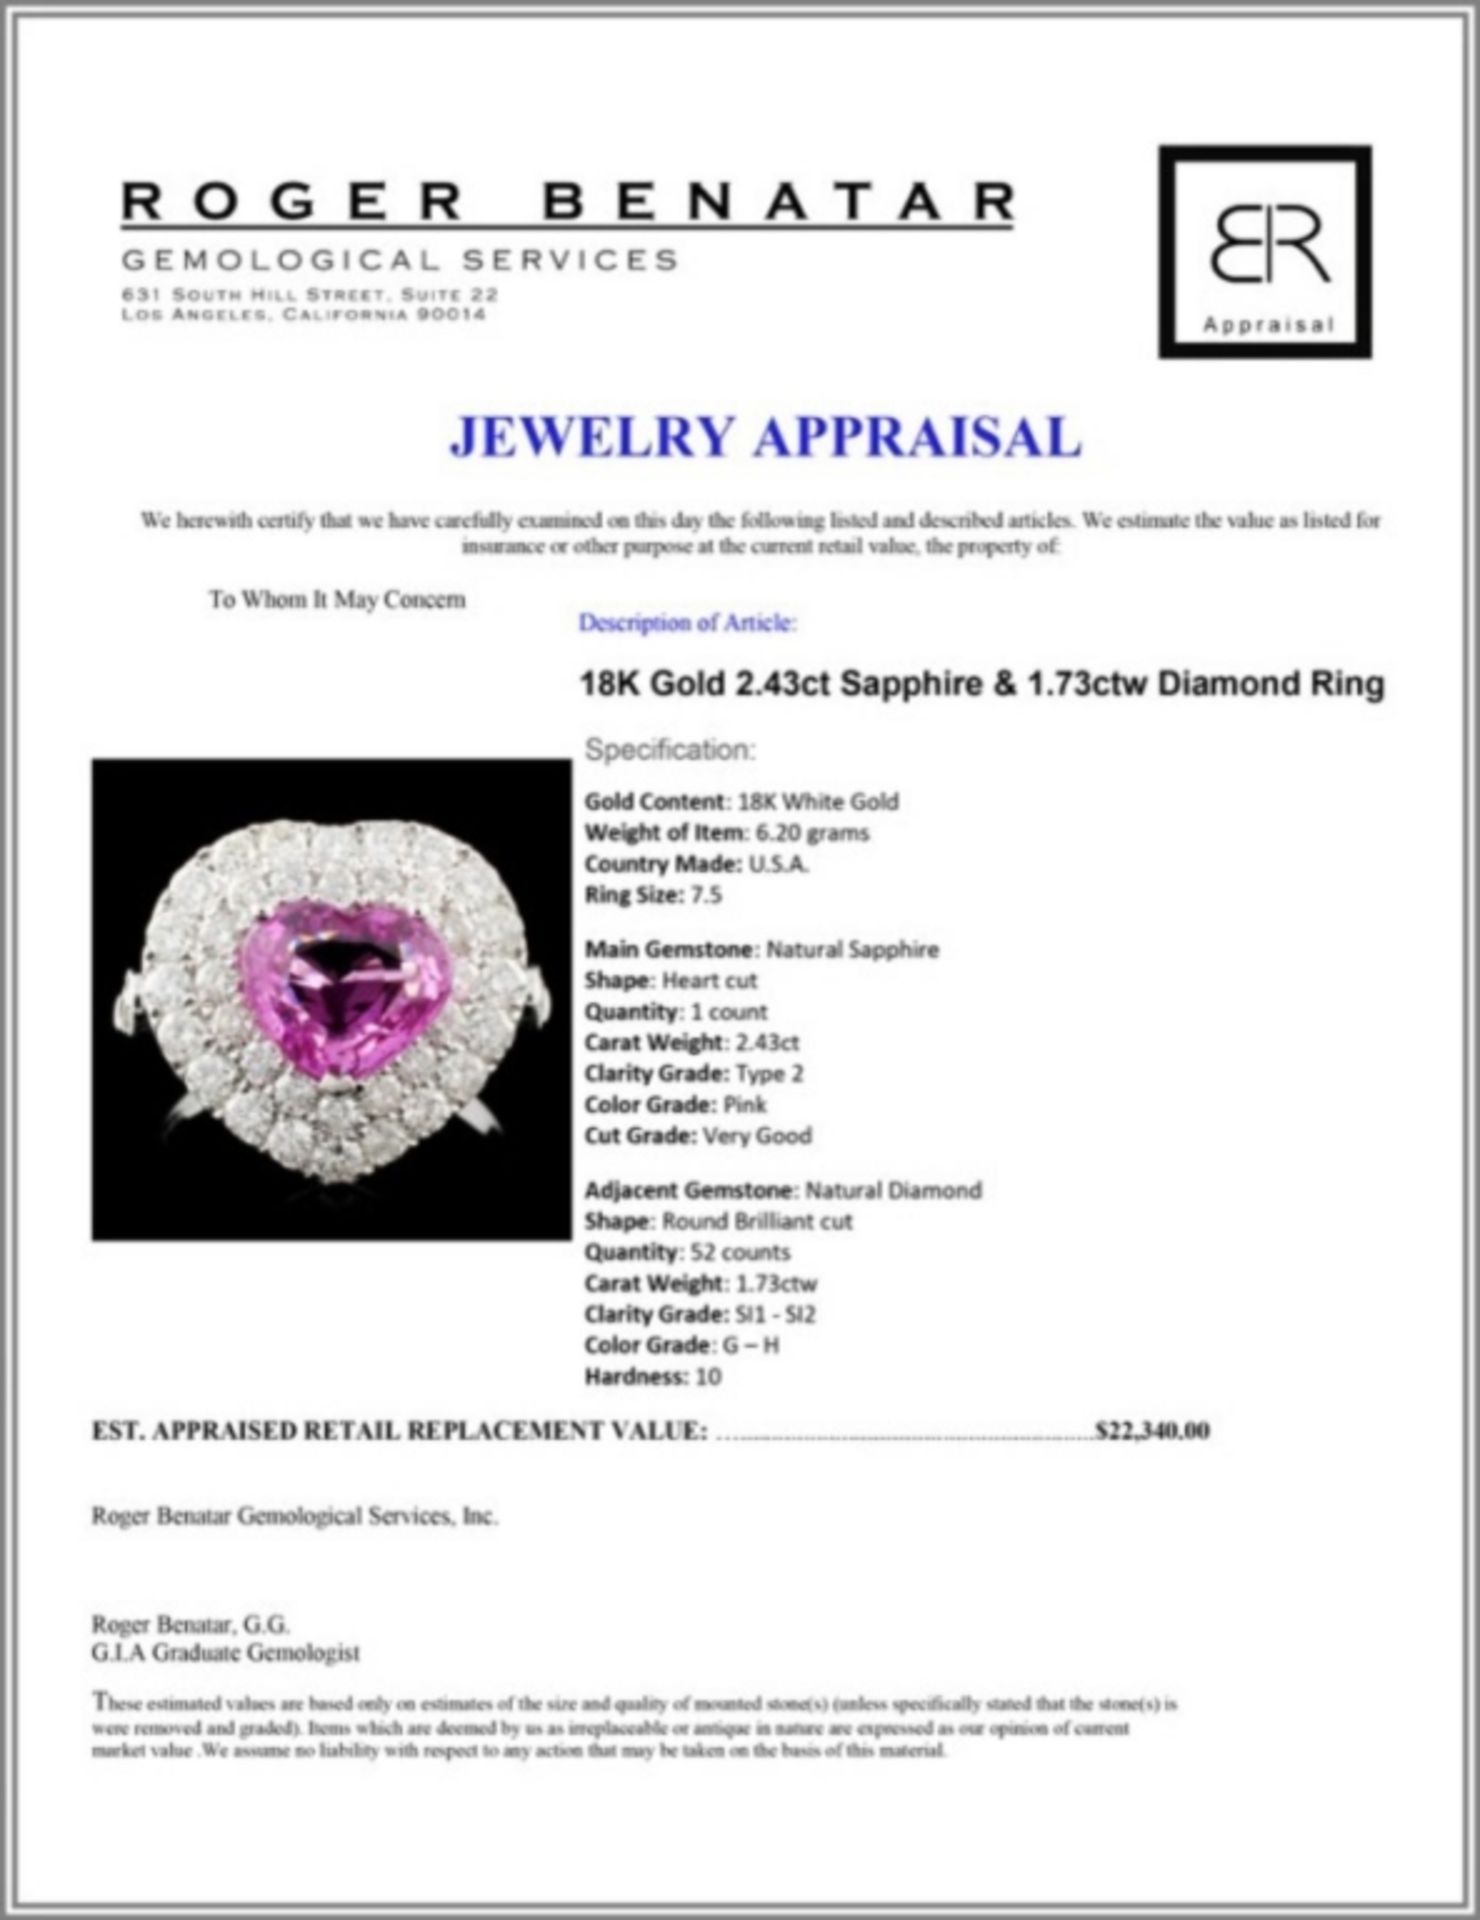 18K Gold 2.43ct Sapphire & 1.73ctw Diamond Ring - Image 4 of 4